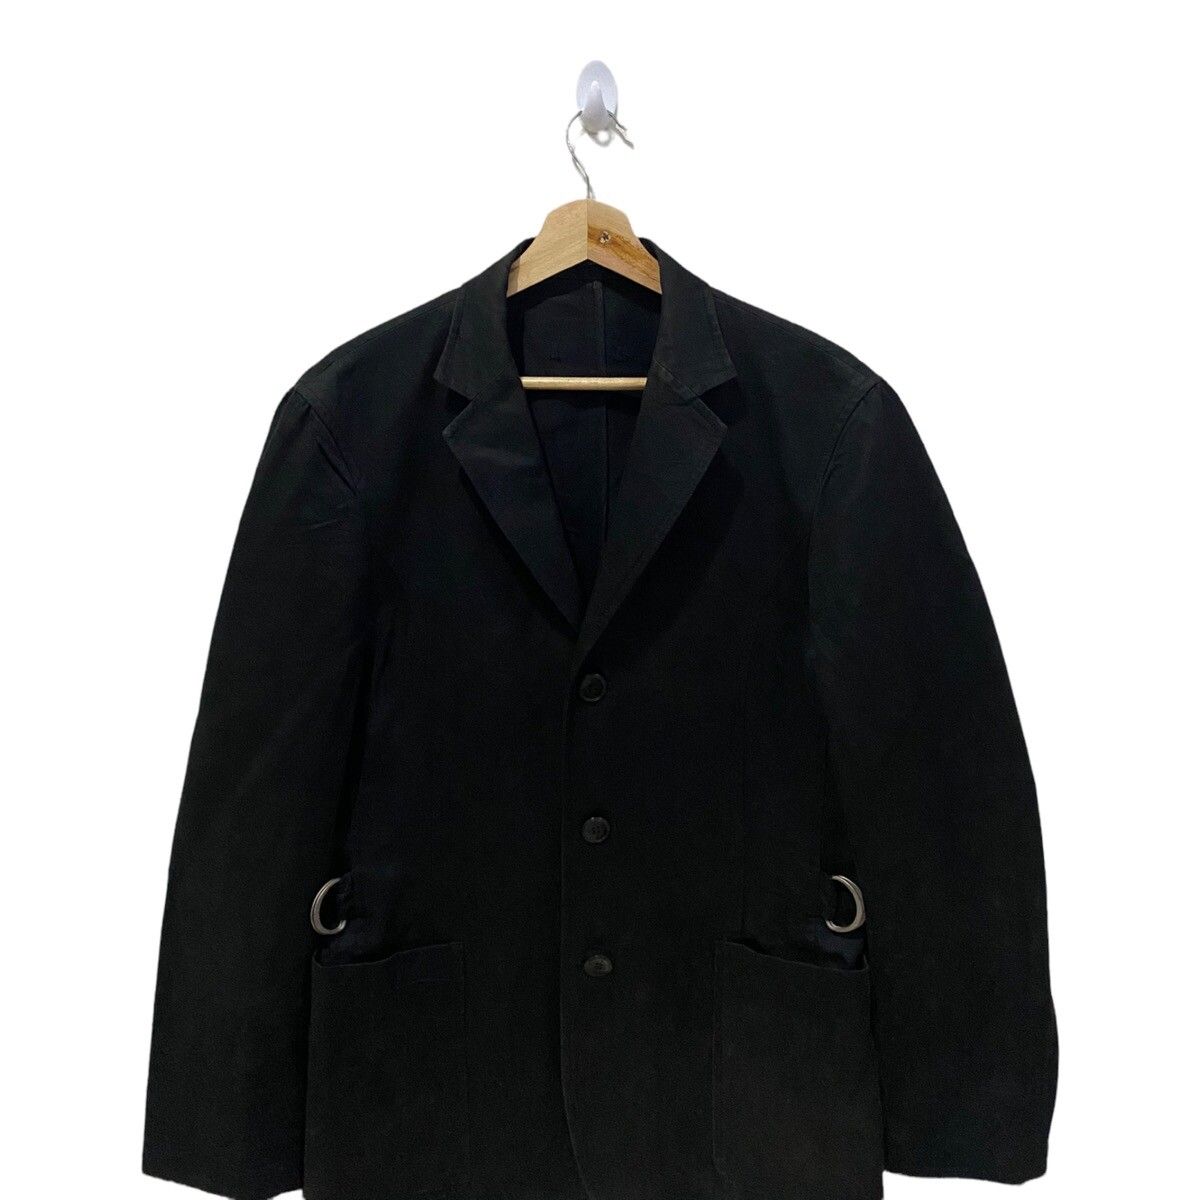 Archival Clothing - GRAIL🔥GAULTIER HOMME OBJET BONDAGE COAT - 7